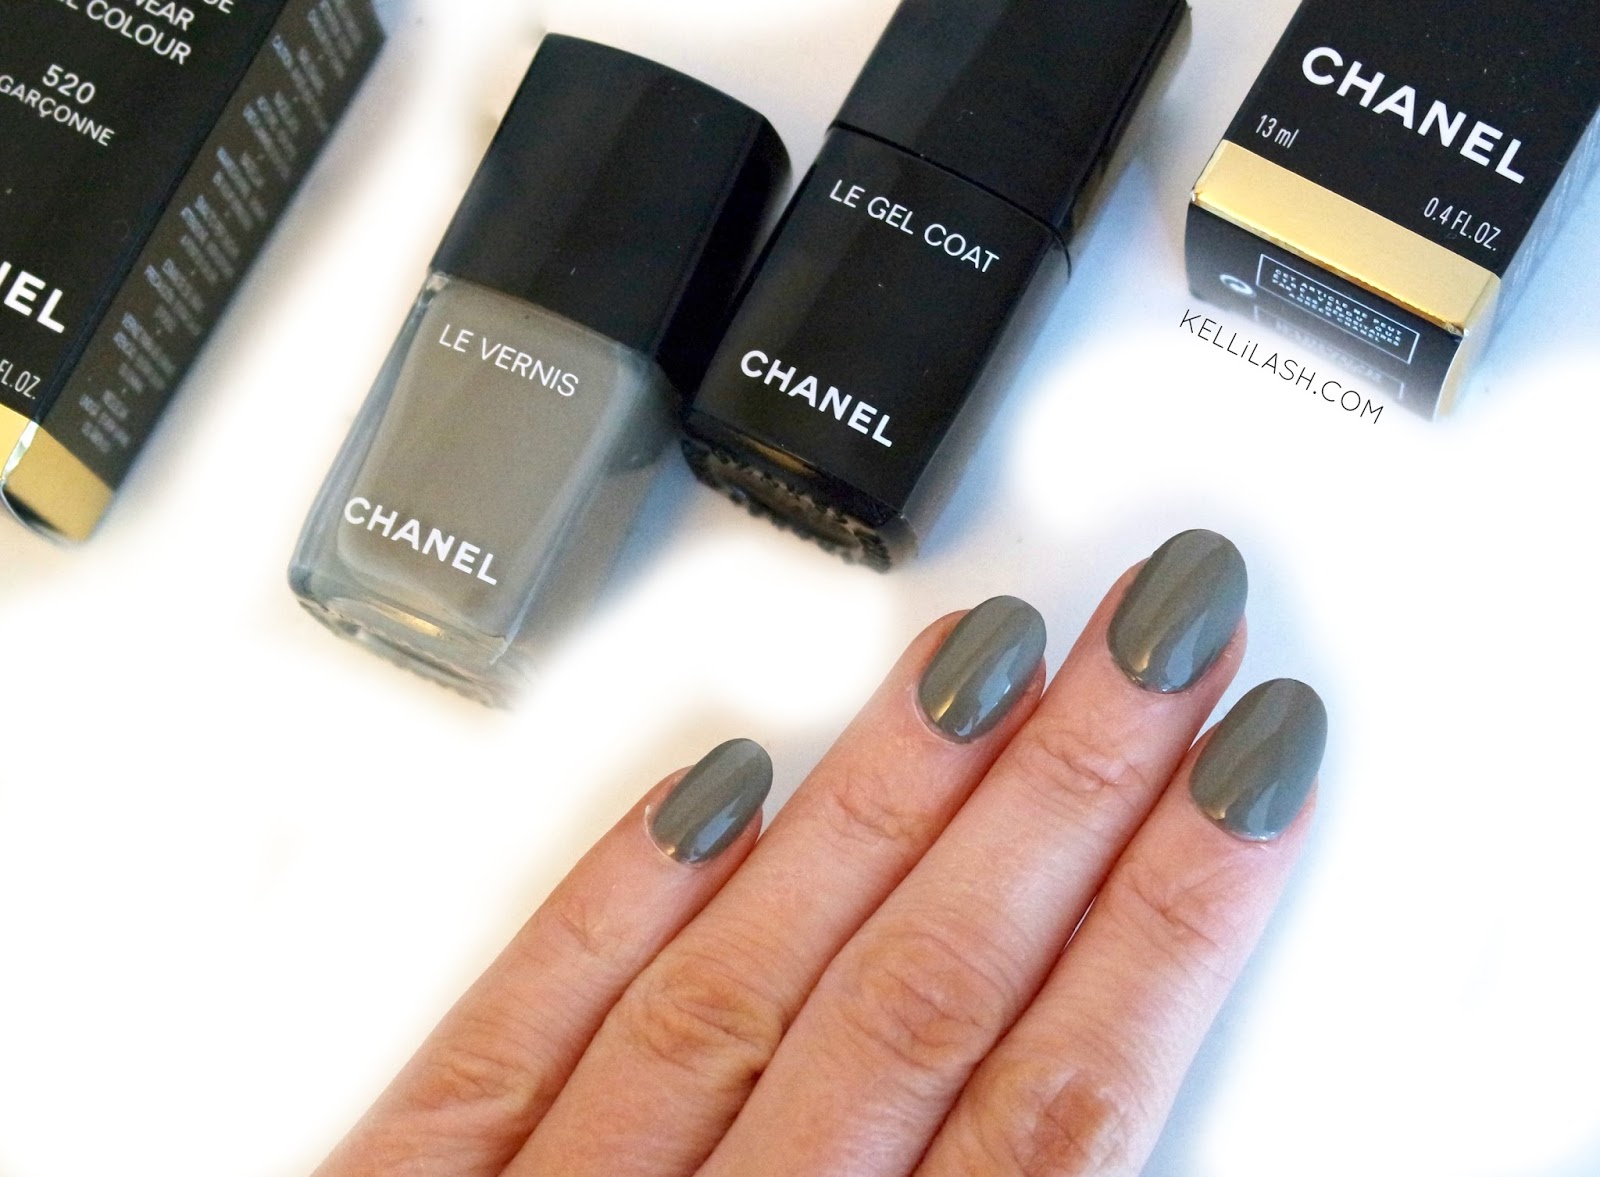 Chanel Le Vernis Longwear Nail Colour in Garçonne - wide 5